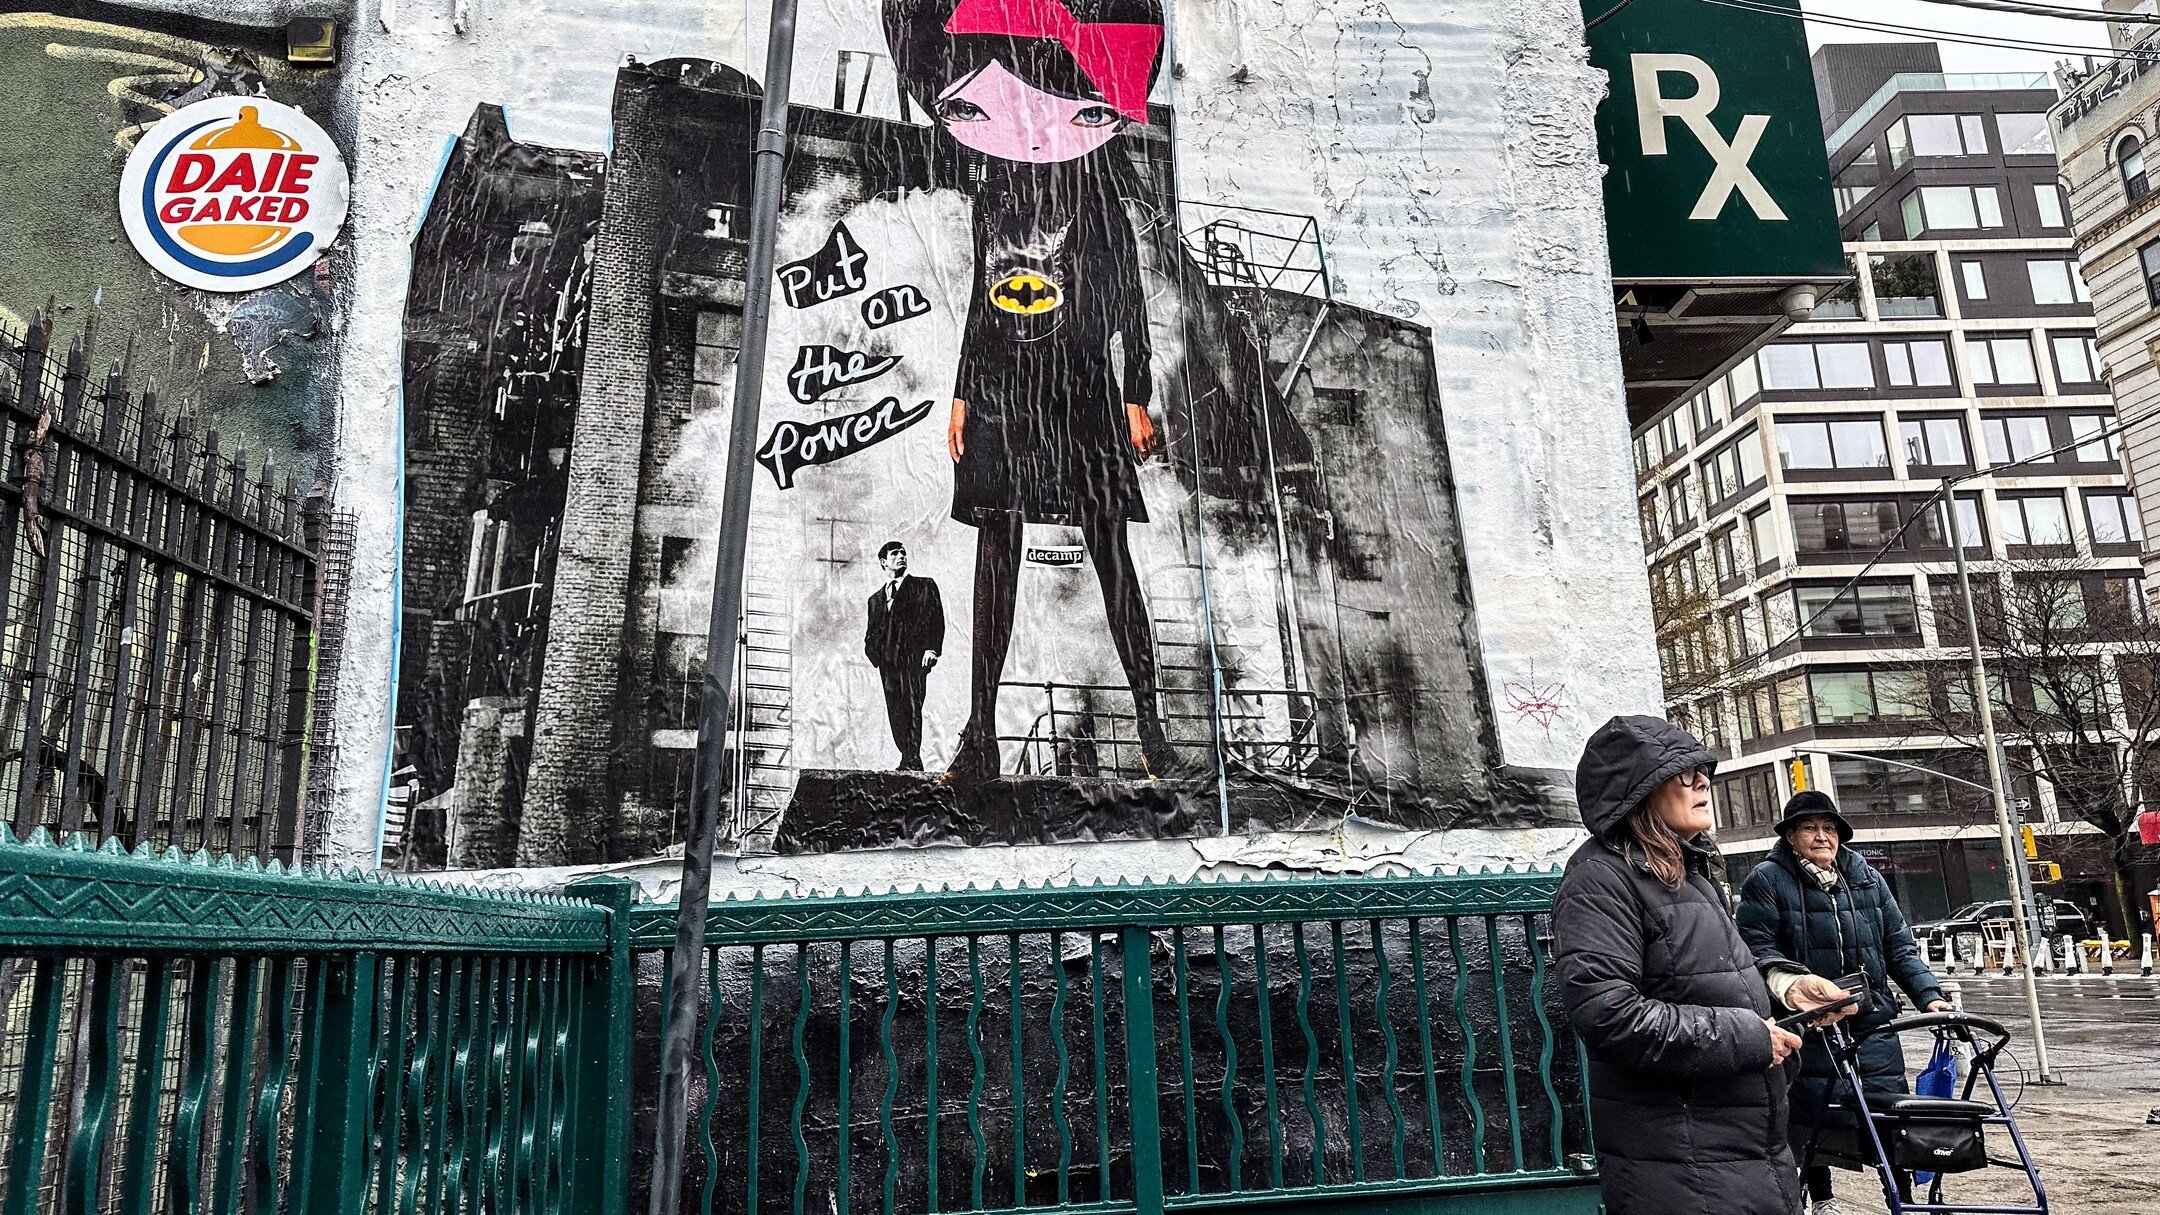 Put on the Power / The hero Gotham deserves // New work by @phoebenewyork at 2nd Ave